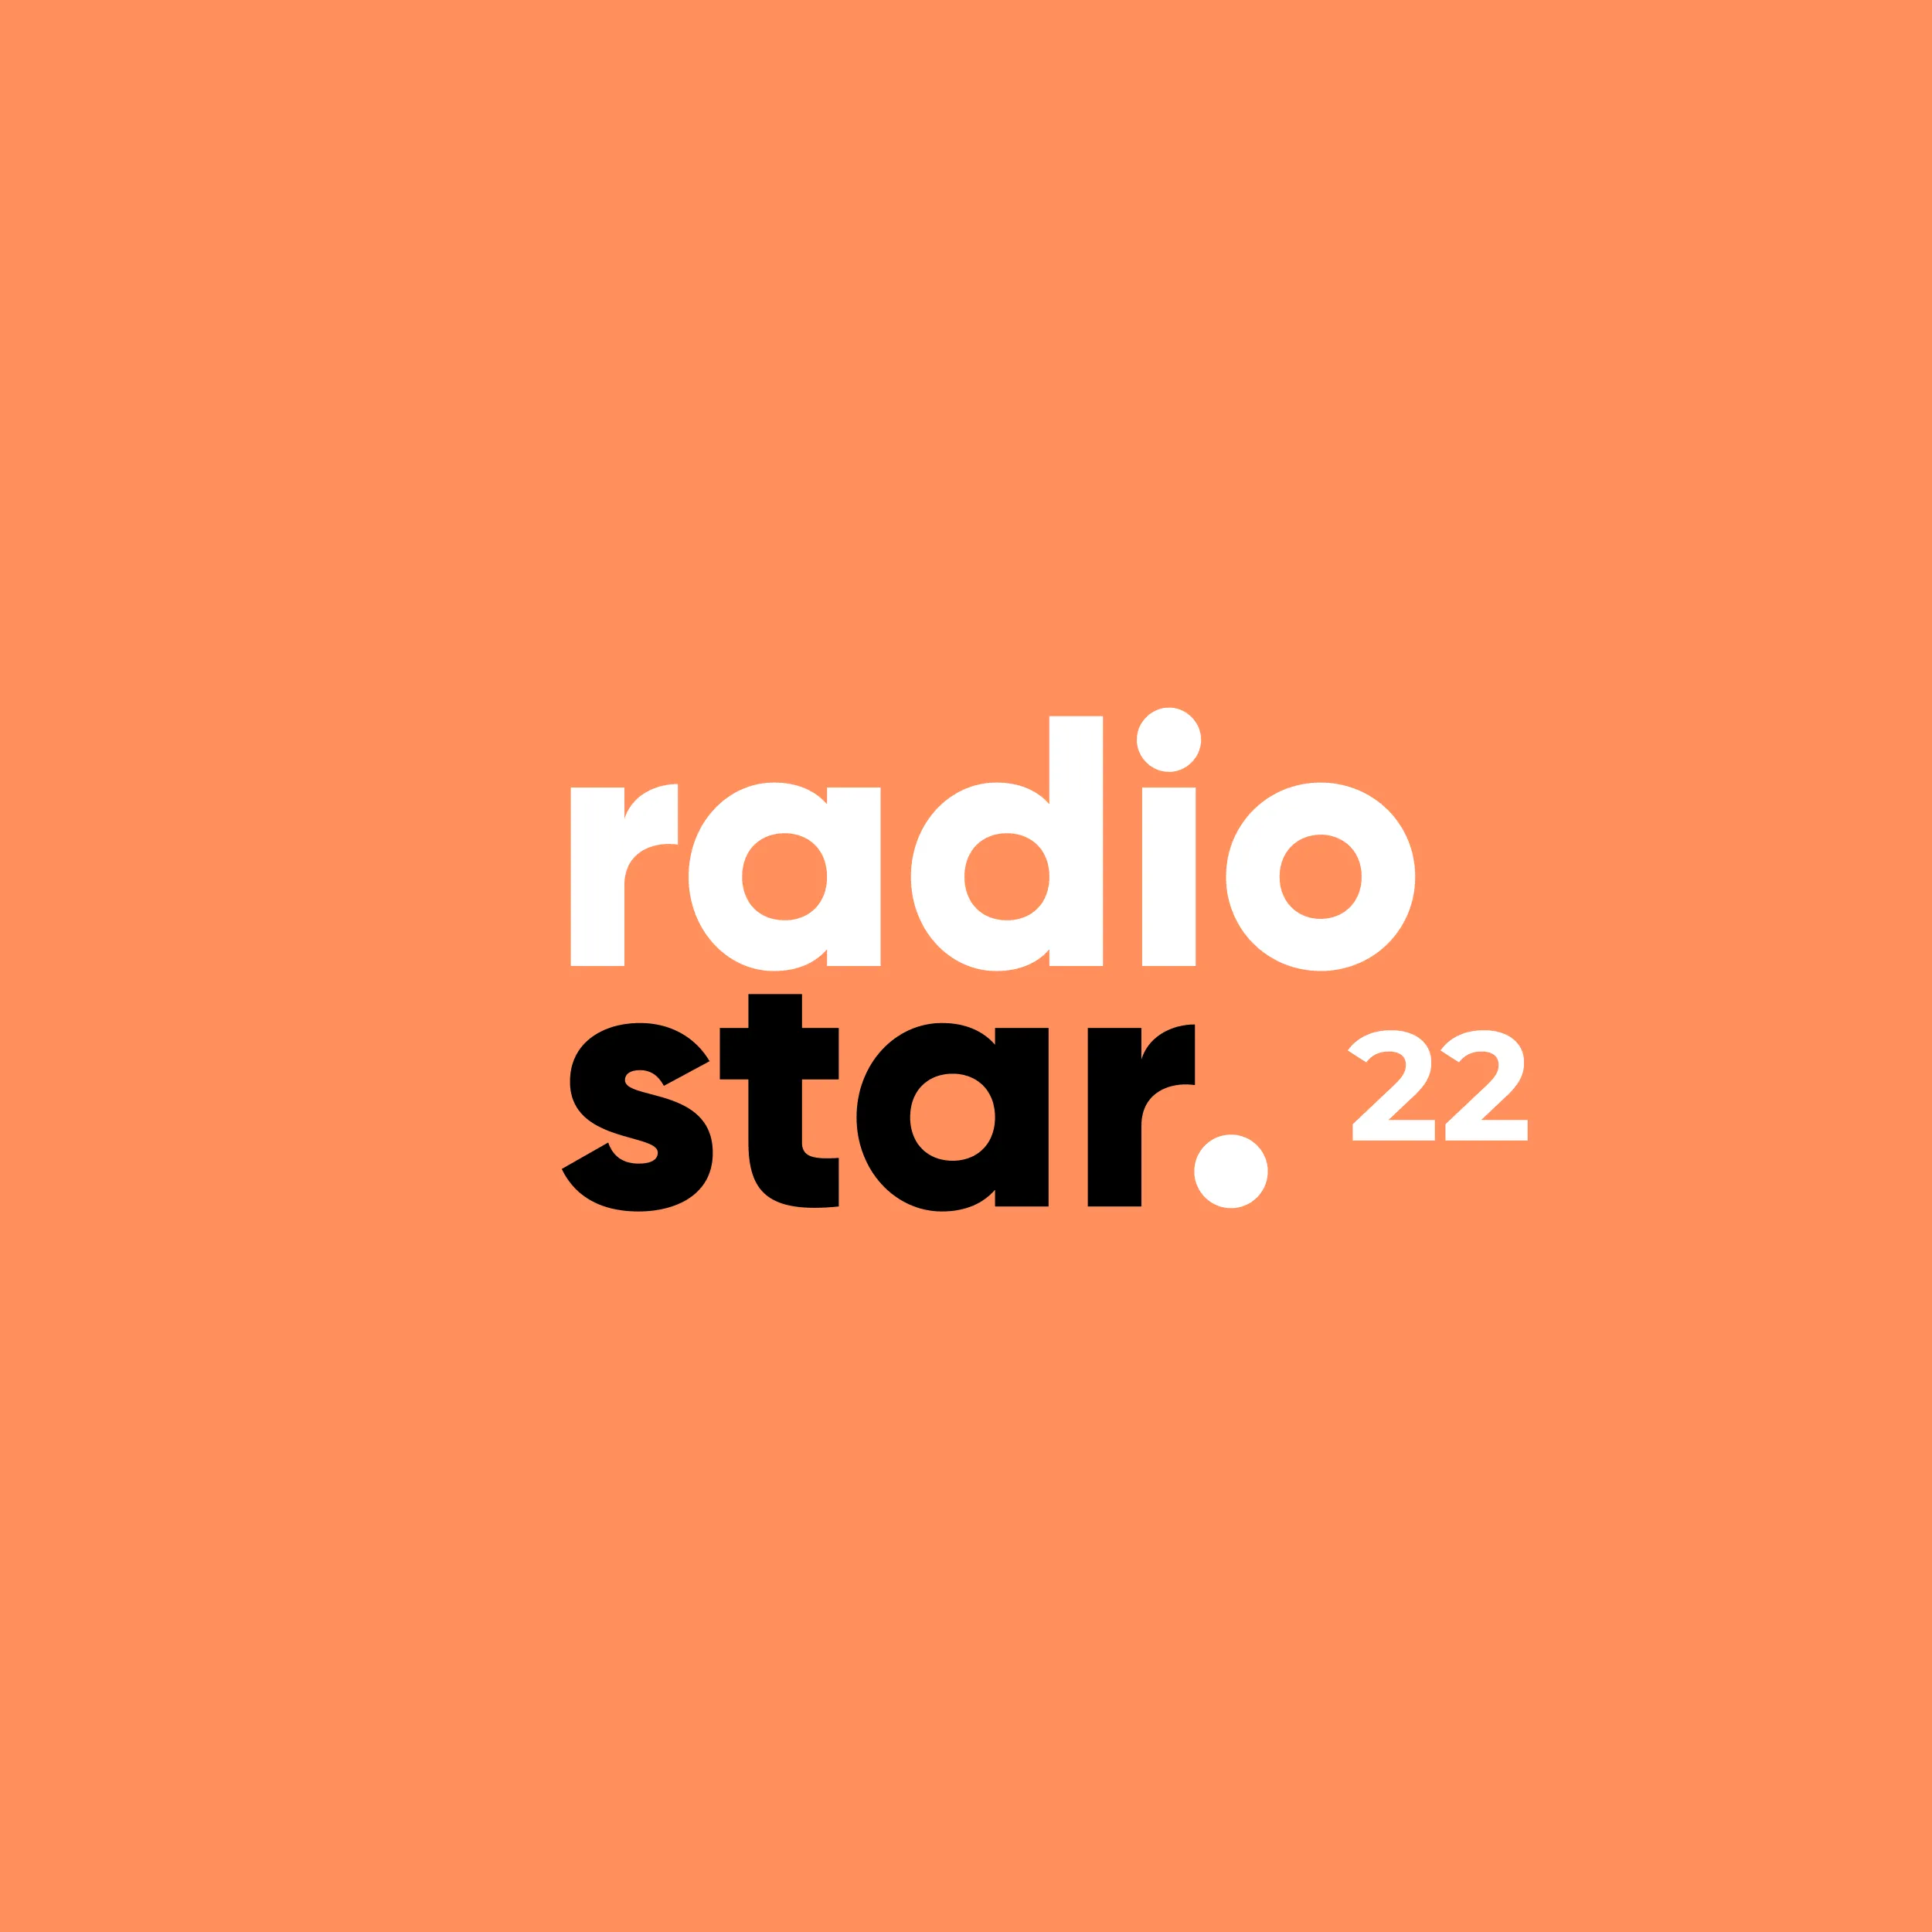 projet : Radio Star 2022